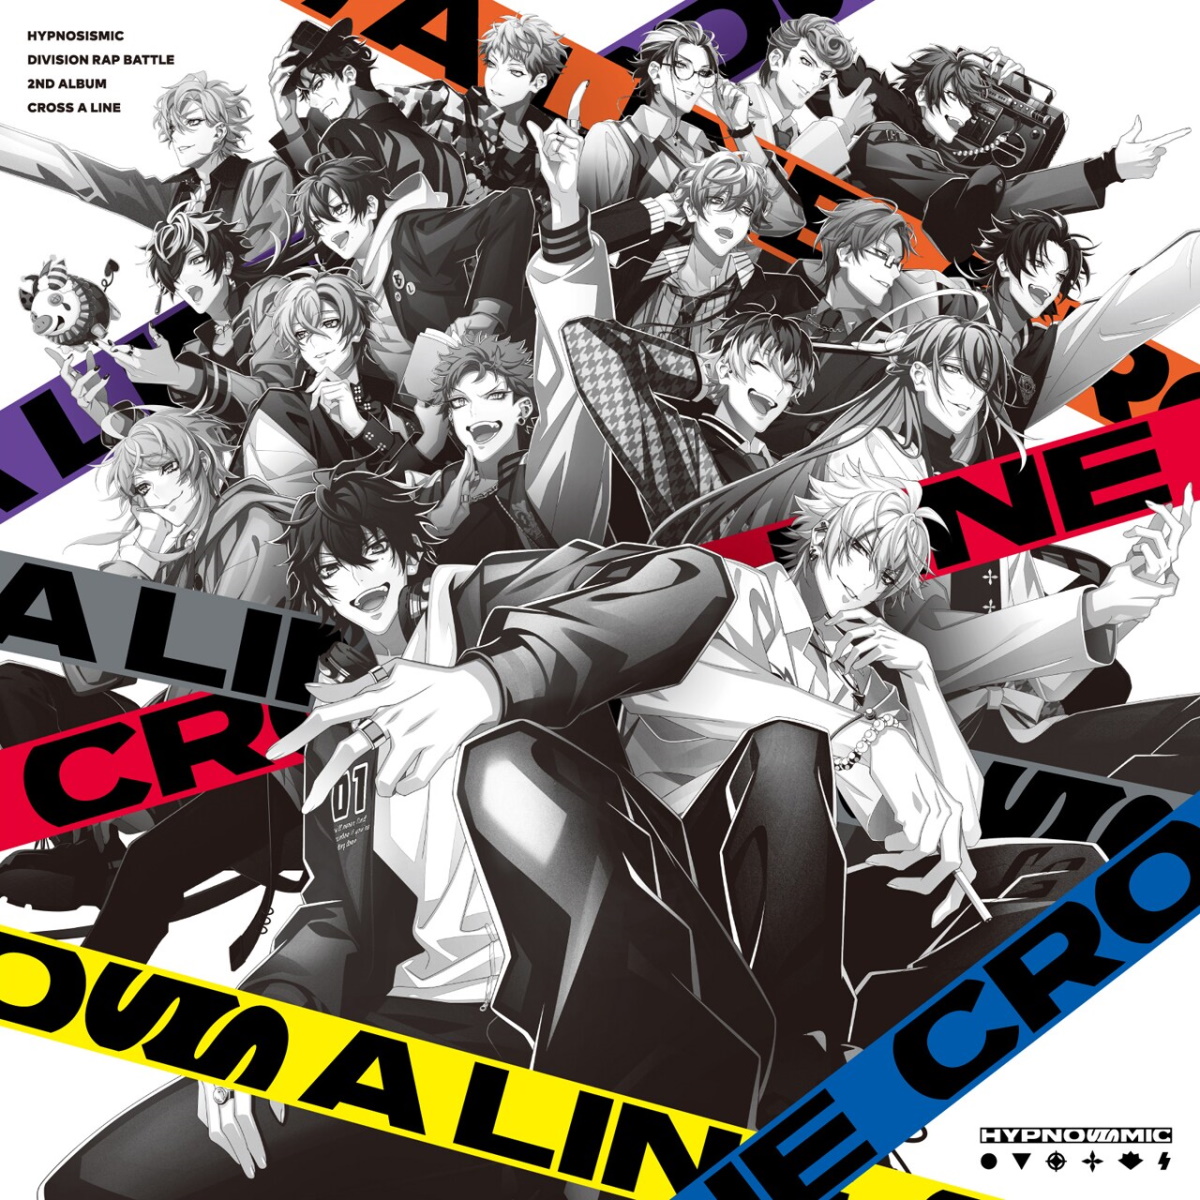 Cover art for『Ramuda Amemura (Yusuke Shirai), Jakurai Jinguji (Sho Hayami) - LESSON』from the release『CROSS A LINE